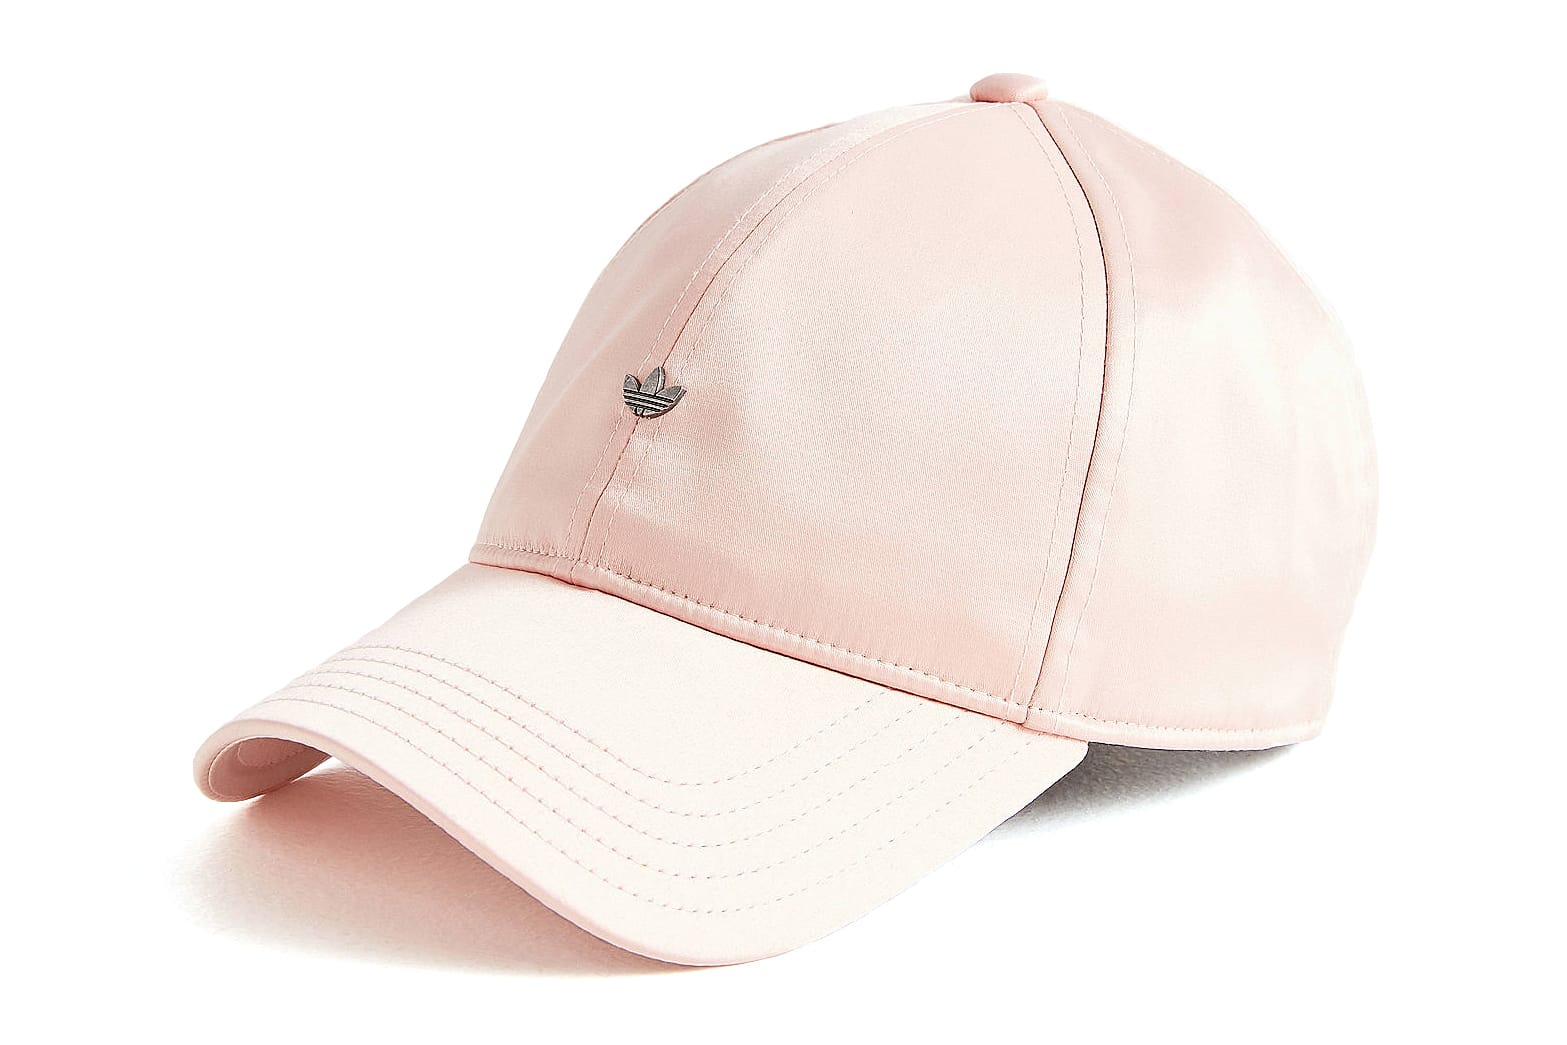 mens pink adidas hat